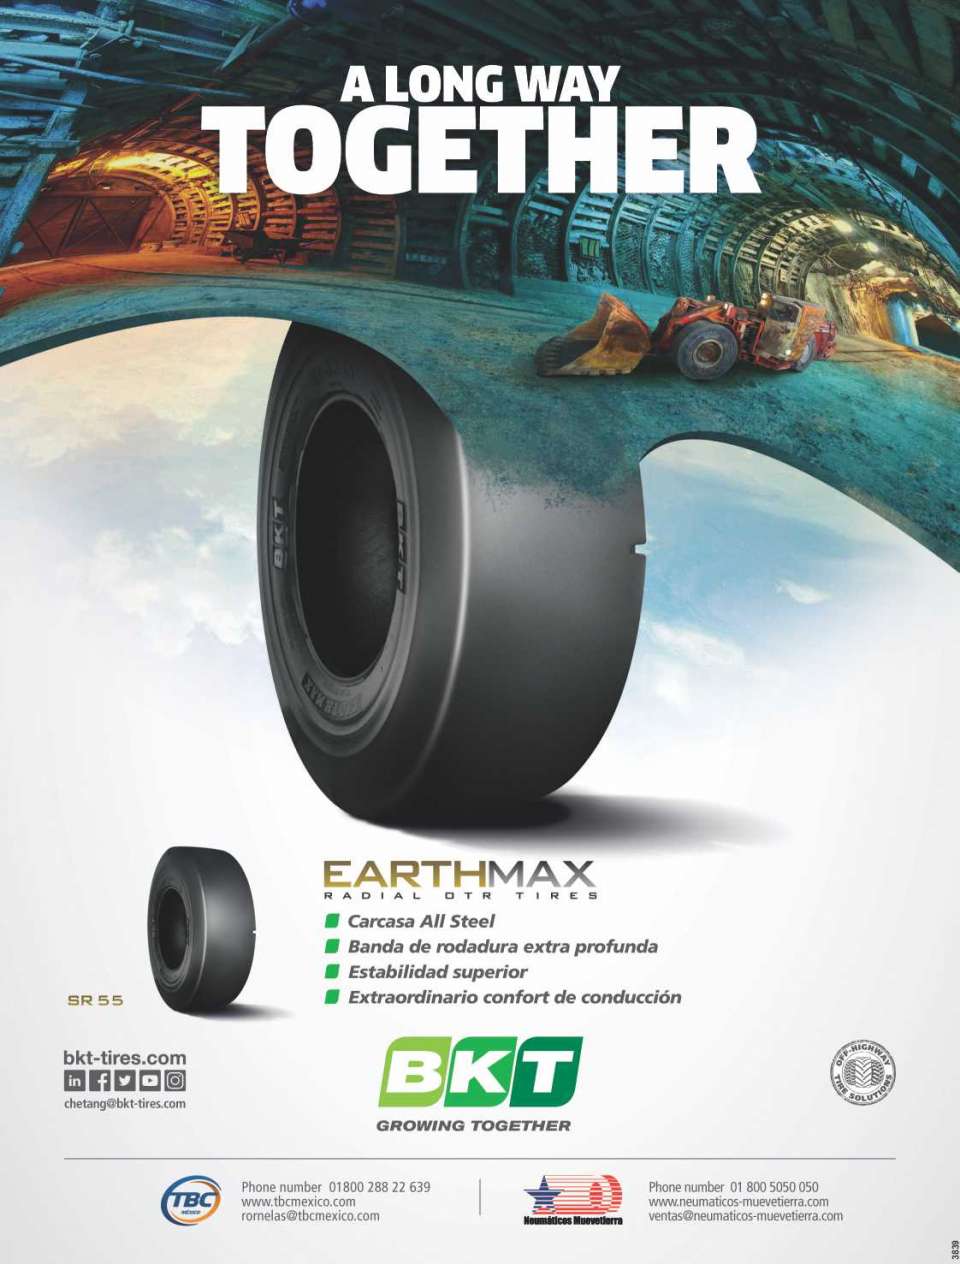 BKT - EARTHMAX - Radial OTR Tires. Tires for mining machinery.